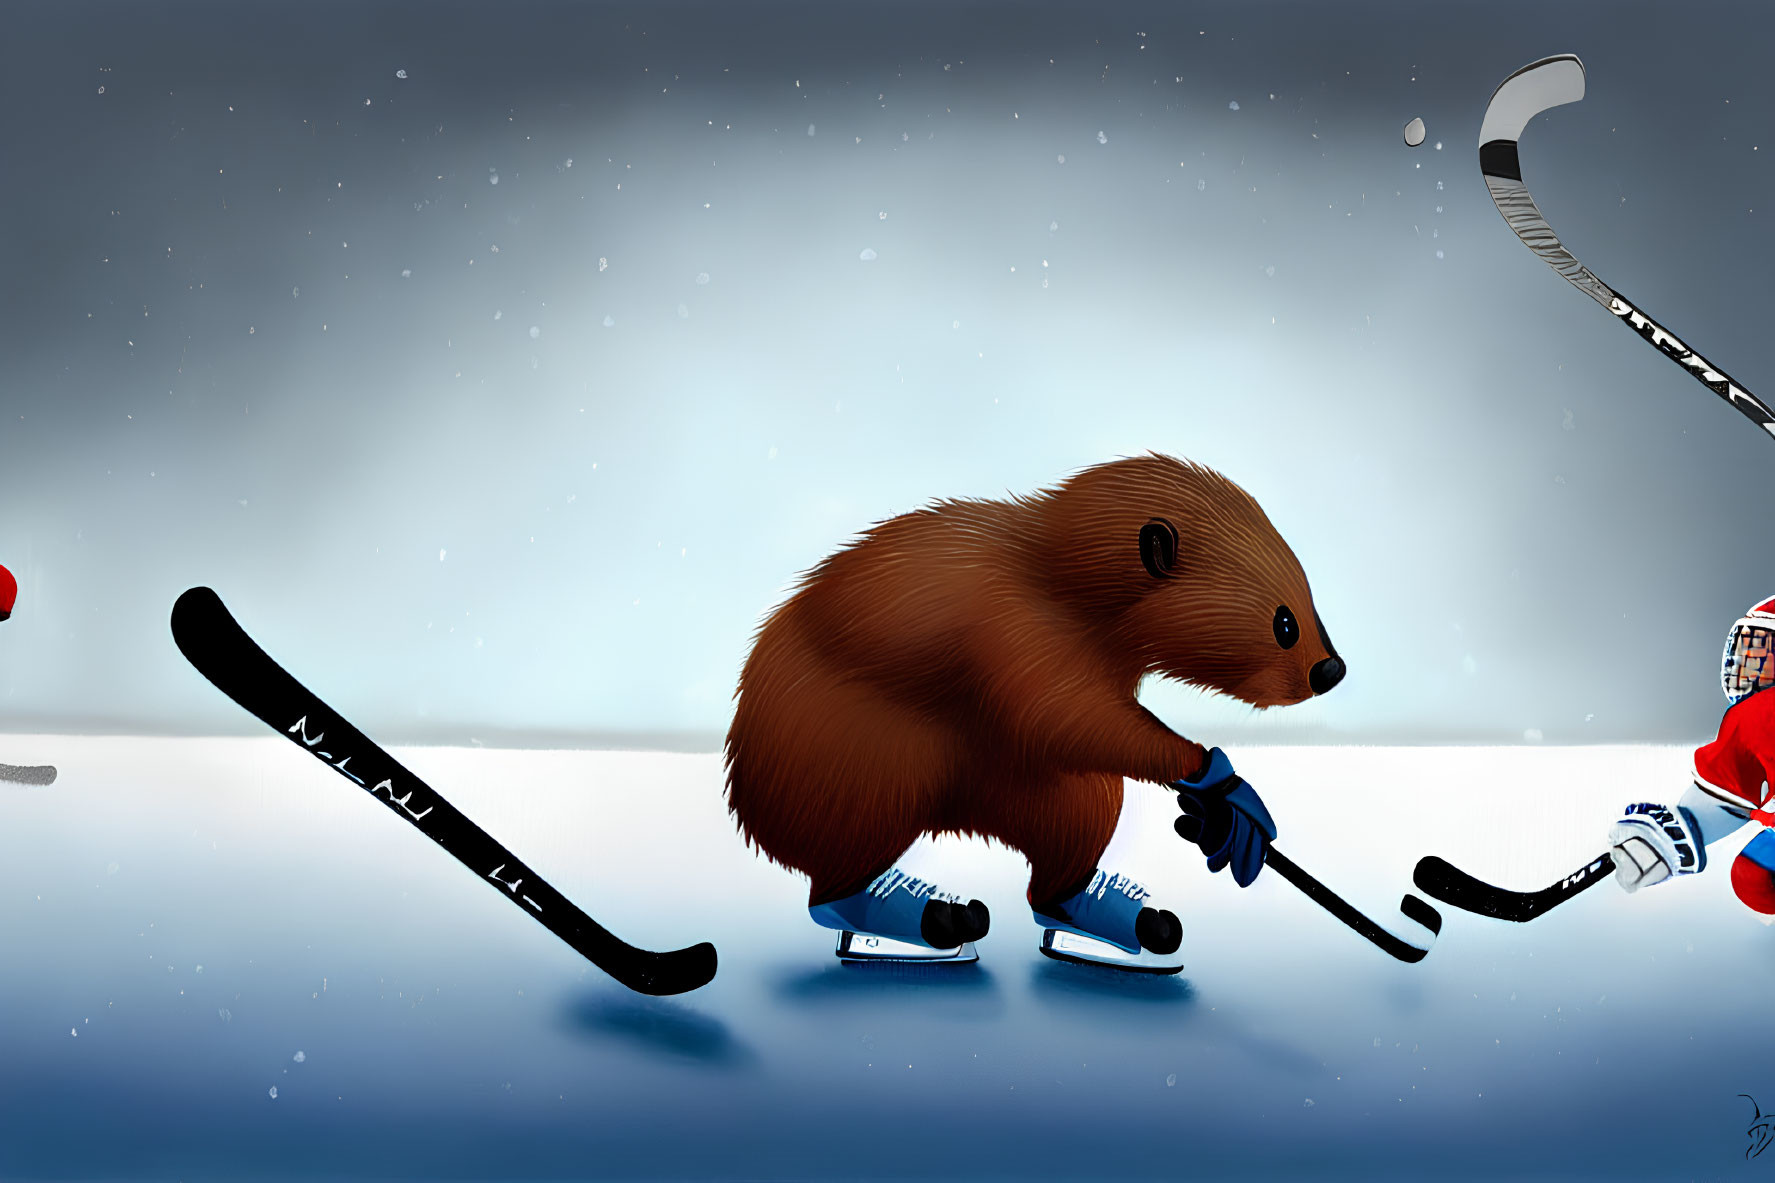 Illustrated beaver playing hockey on ice skates with sticks